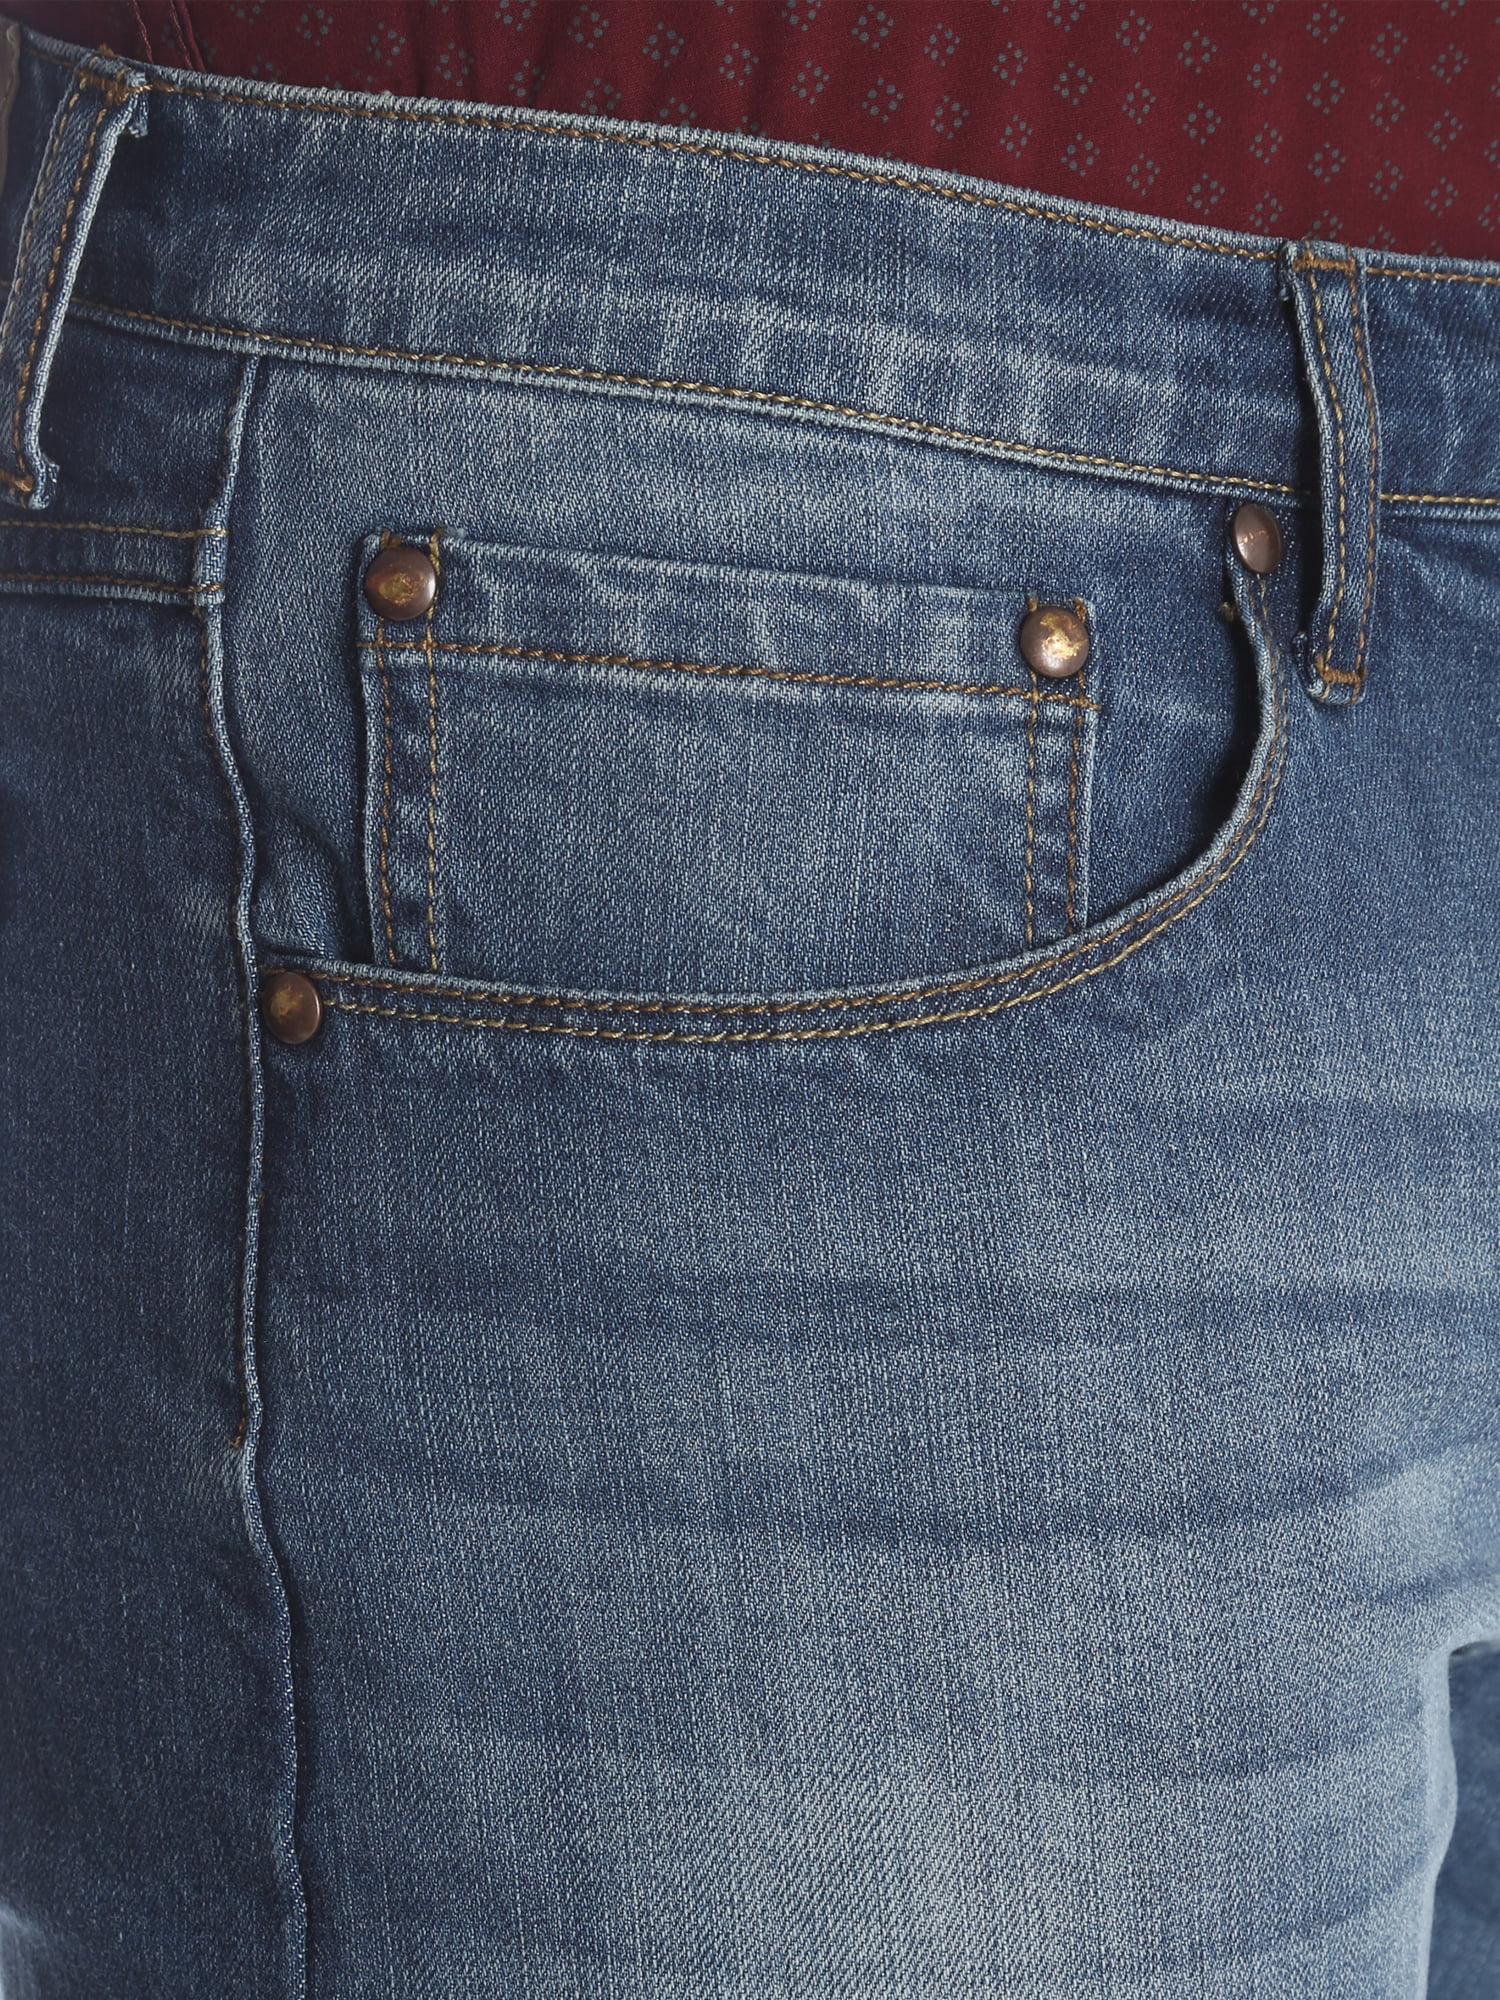 walmart wrangler flex jeans